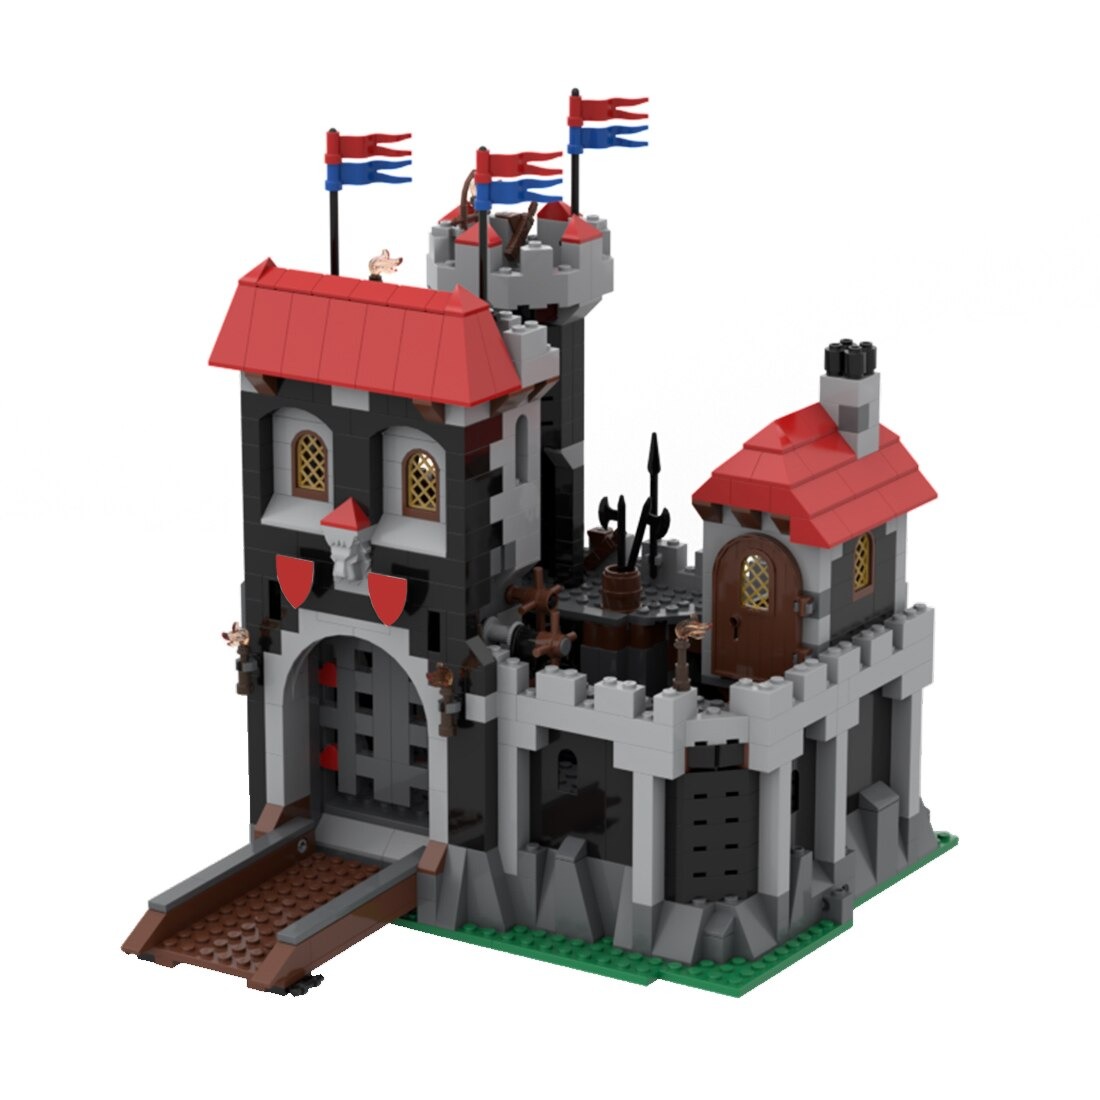 Medieval Black Castle MOC-116972 Creator With 1066 Pieces